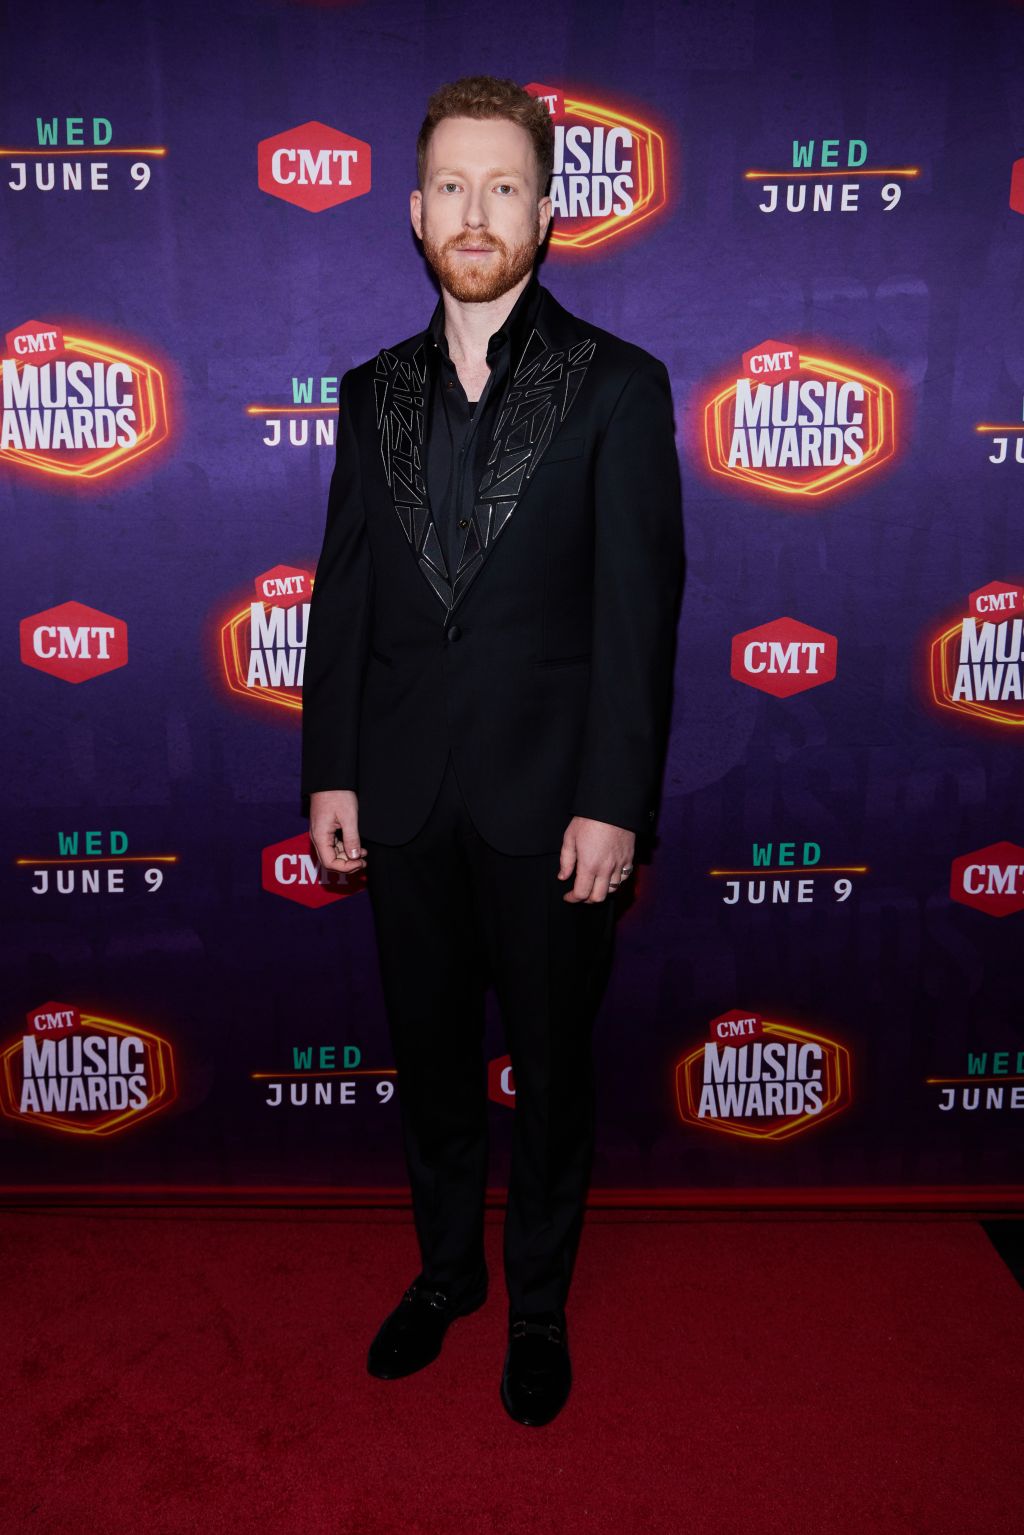 Photos: CMT Music Awards 2021 red carpet